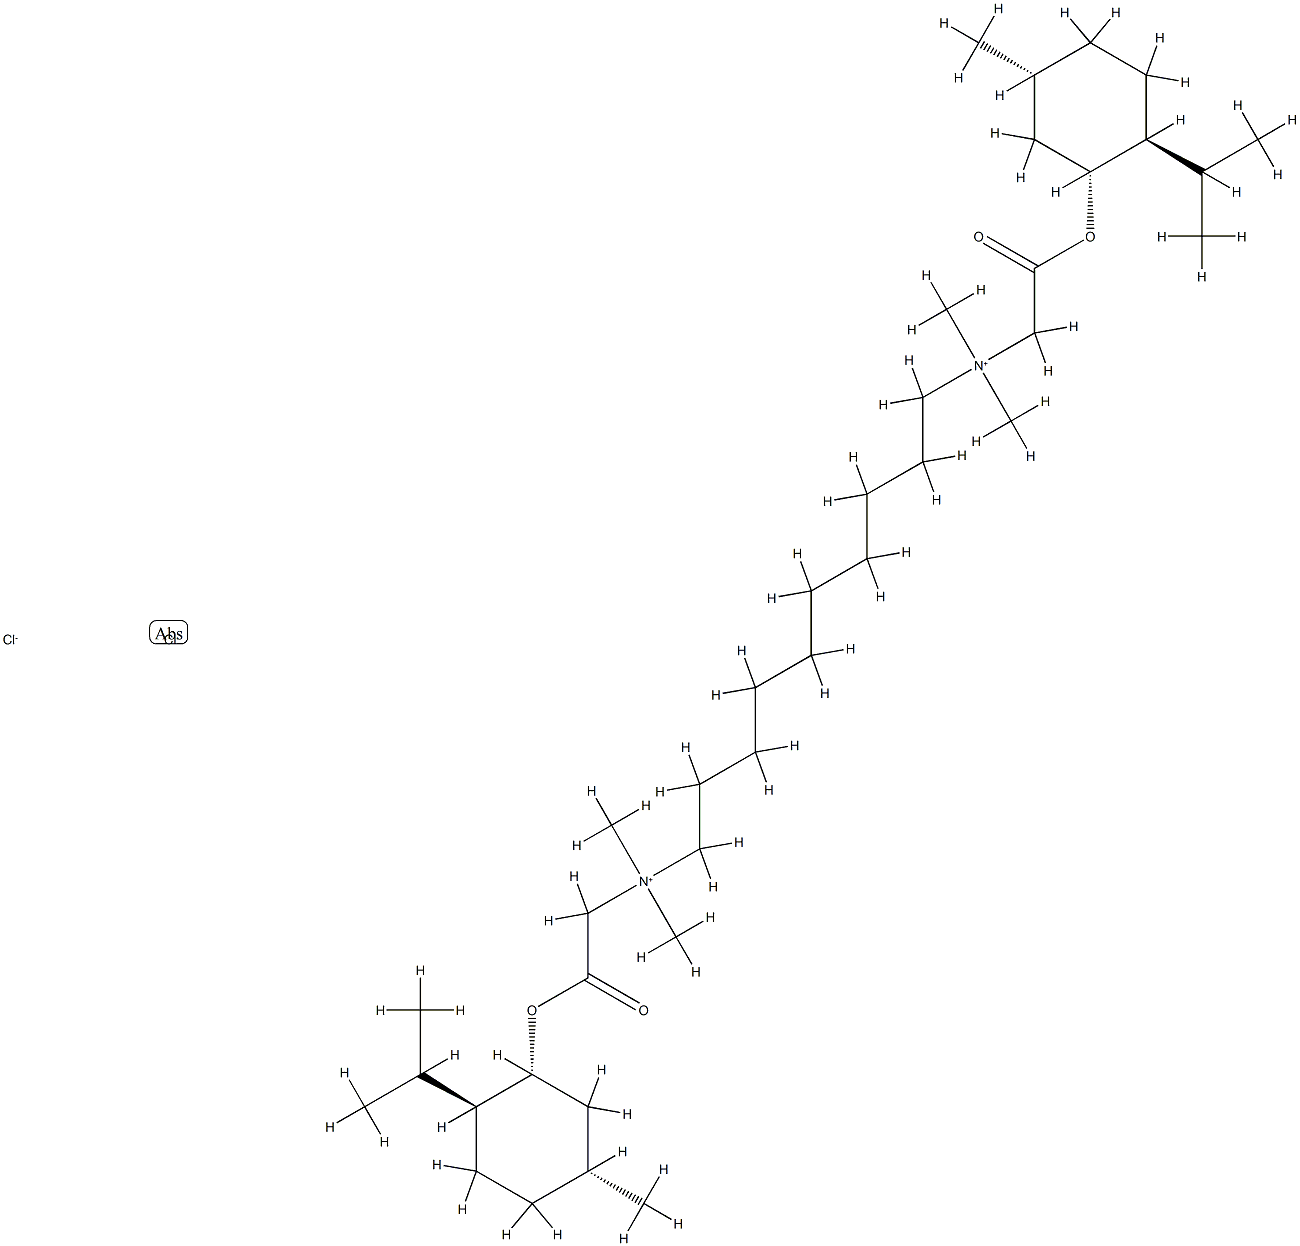 1,10-Bis-(menthyloxycarbonylmethyl-dimethyl-ammonium)-decandichloride racemate, DECAMETHOXINE, BP2000